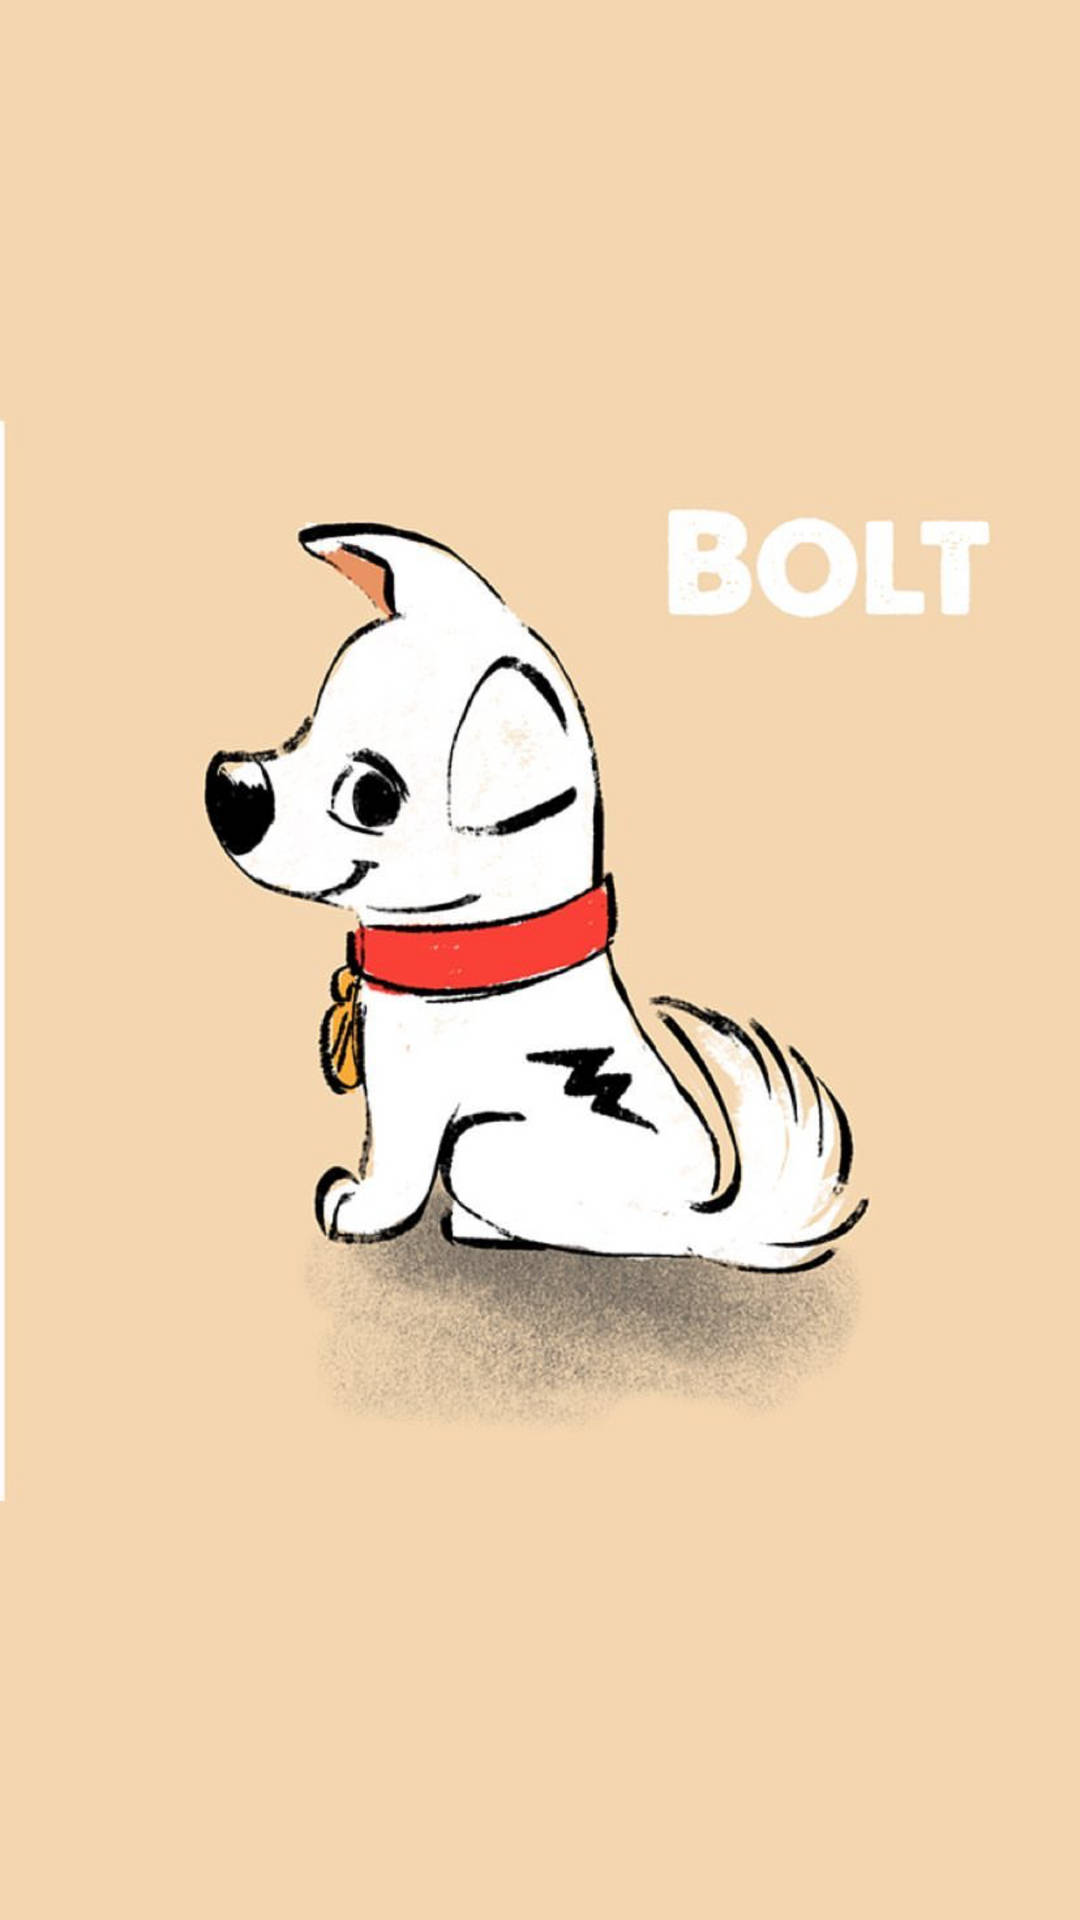 Bolt Digital Art Background